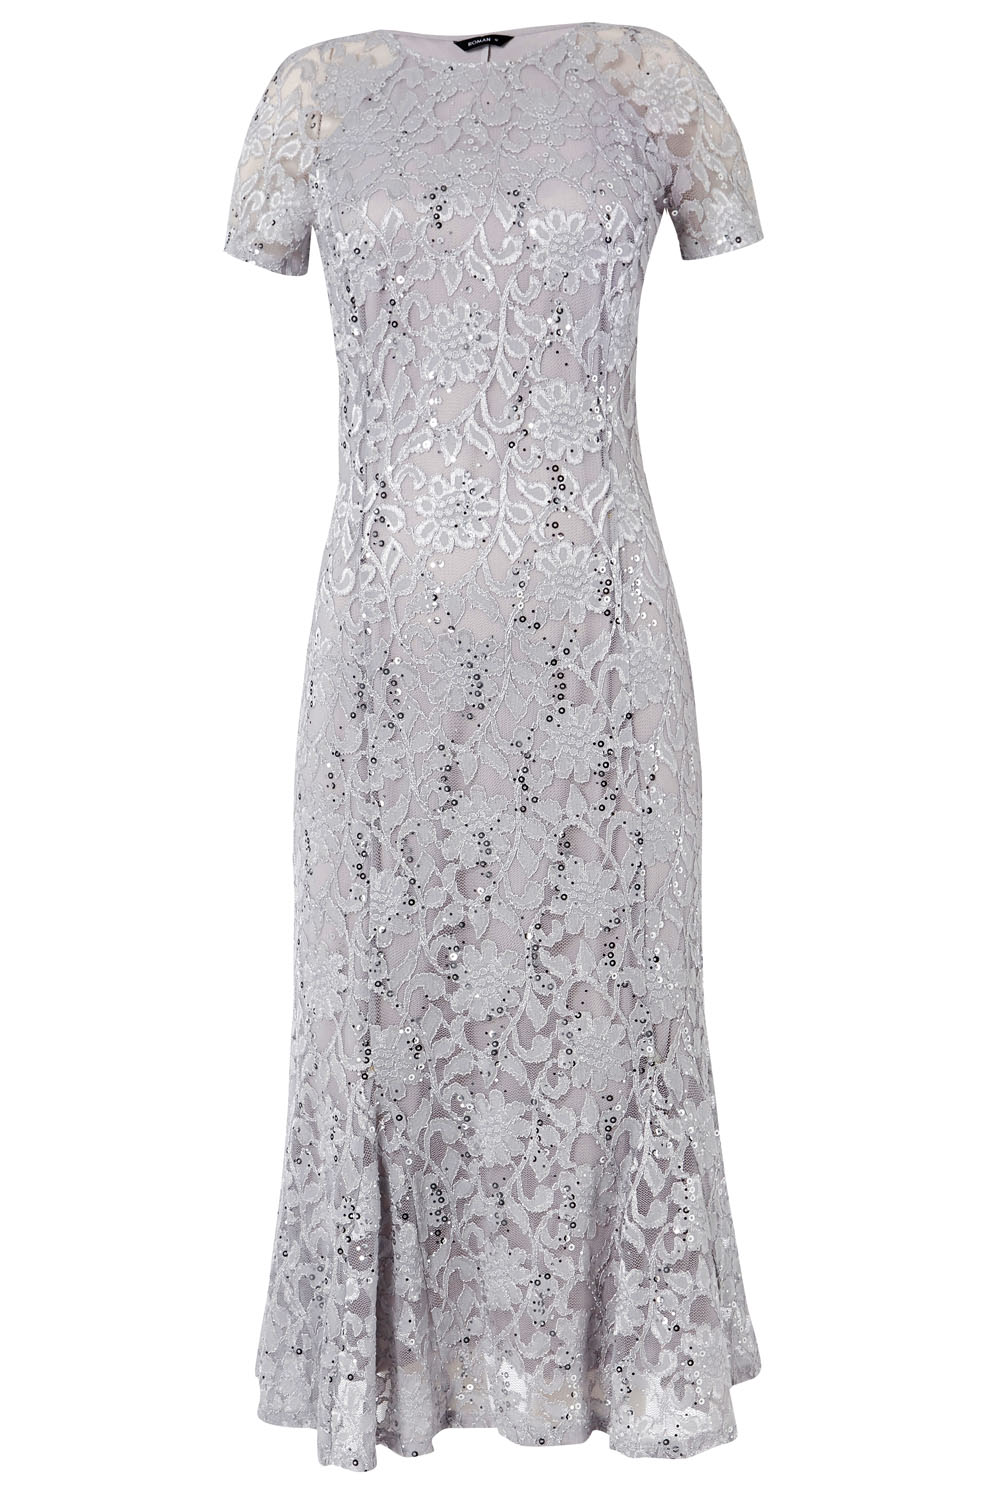 Metallic Lace Sequin Midi Dress in Silver - Roman Originals UK